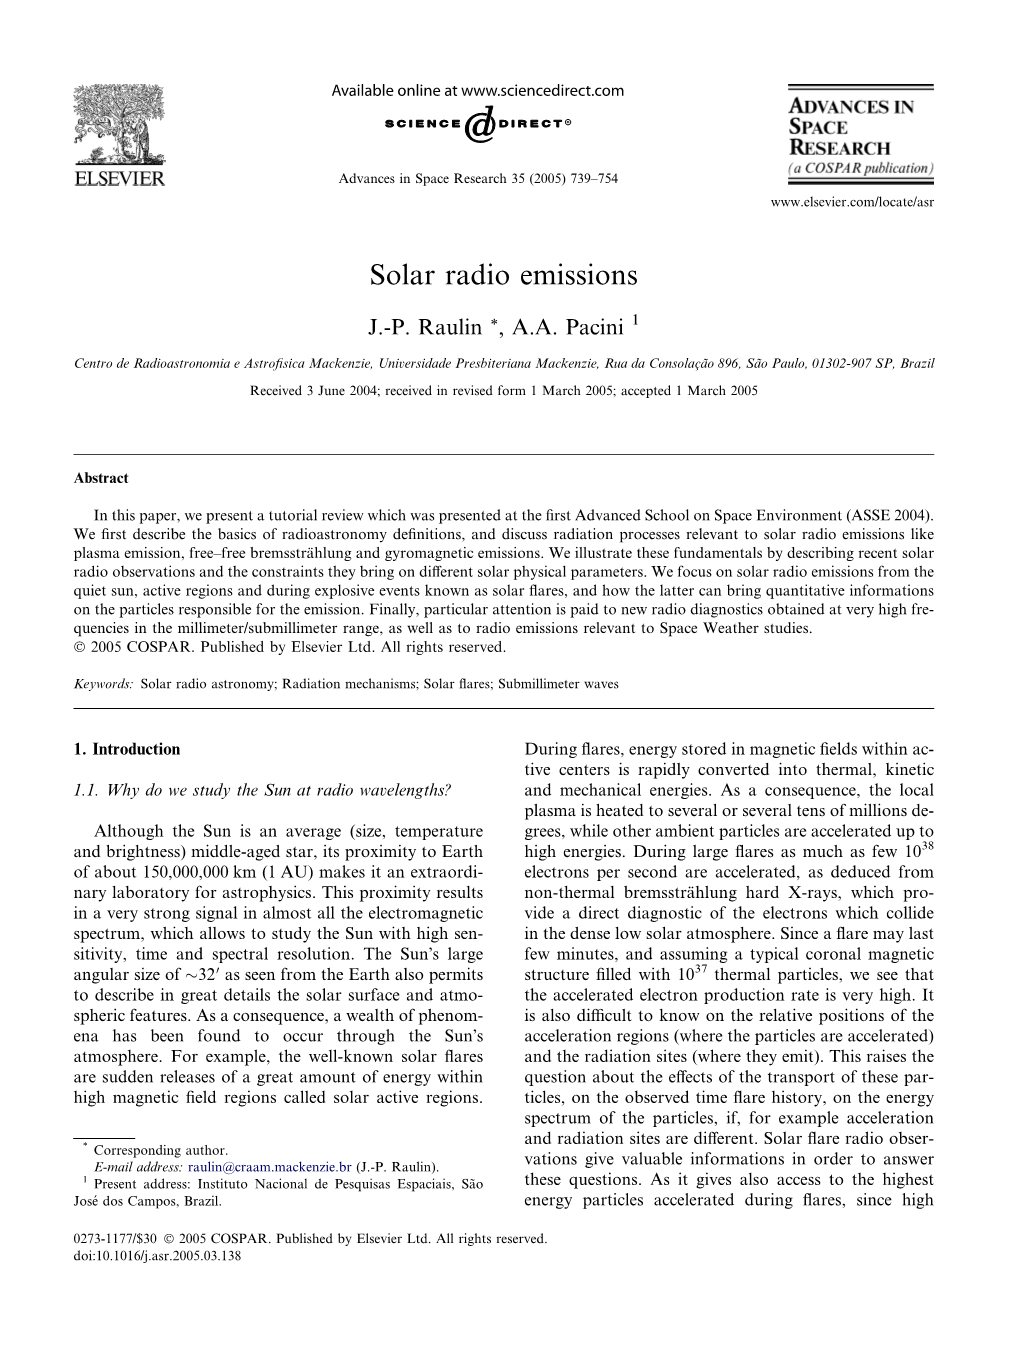 Solar Radio Emissions